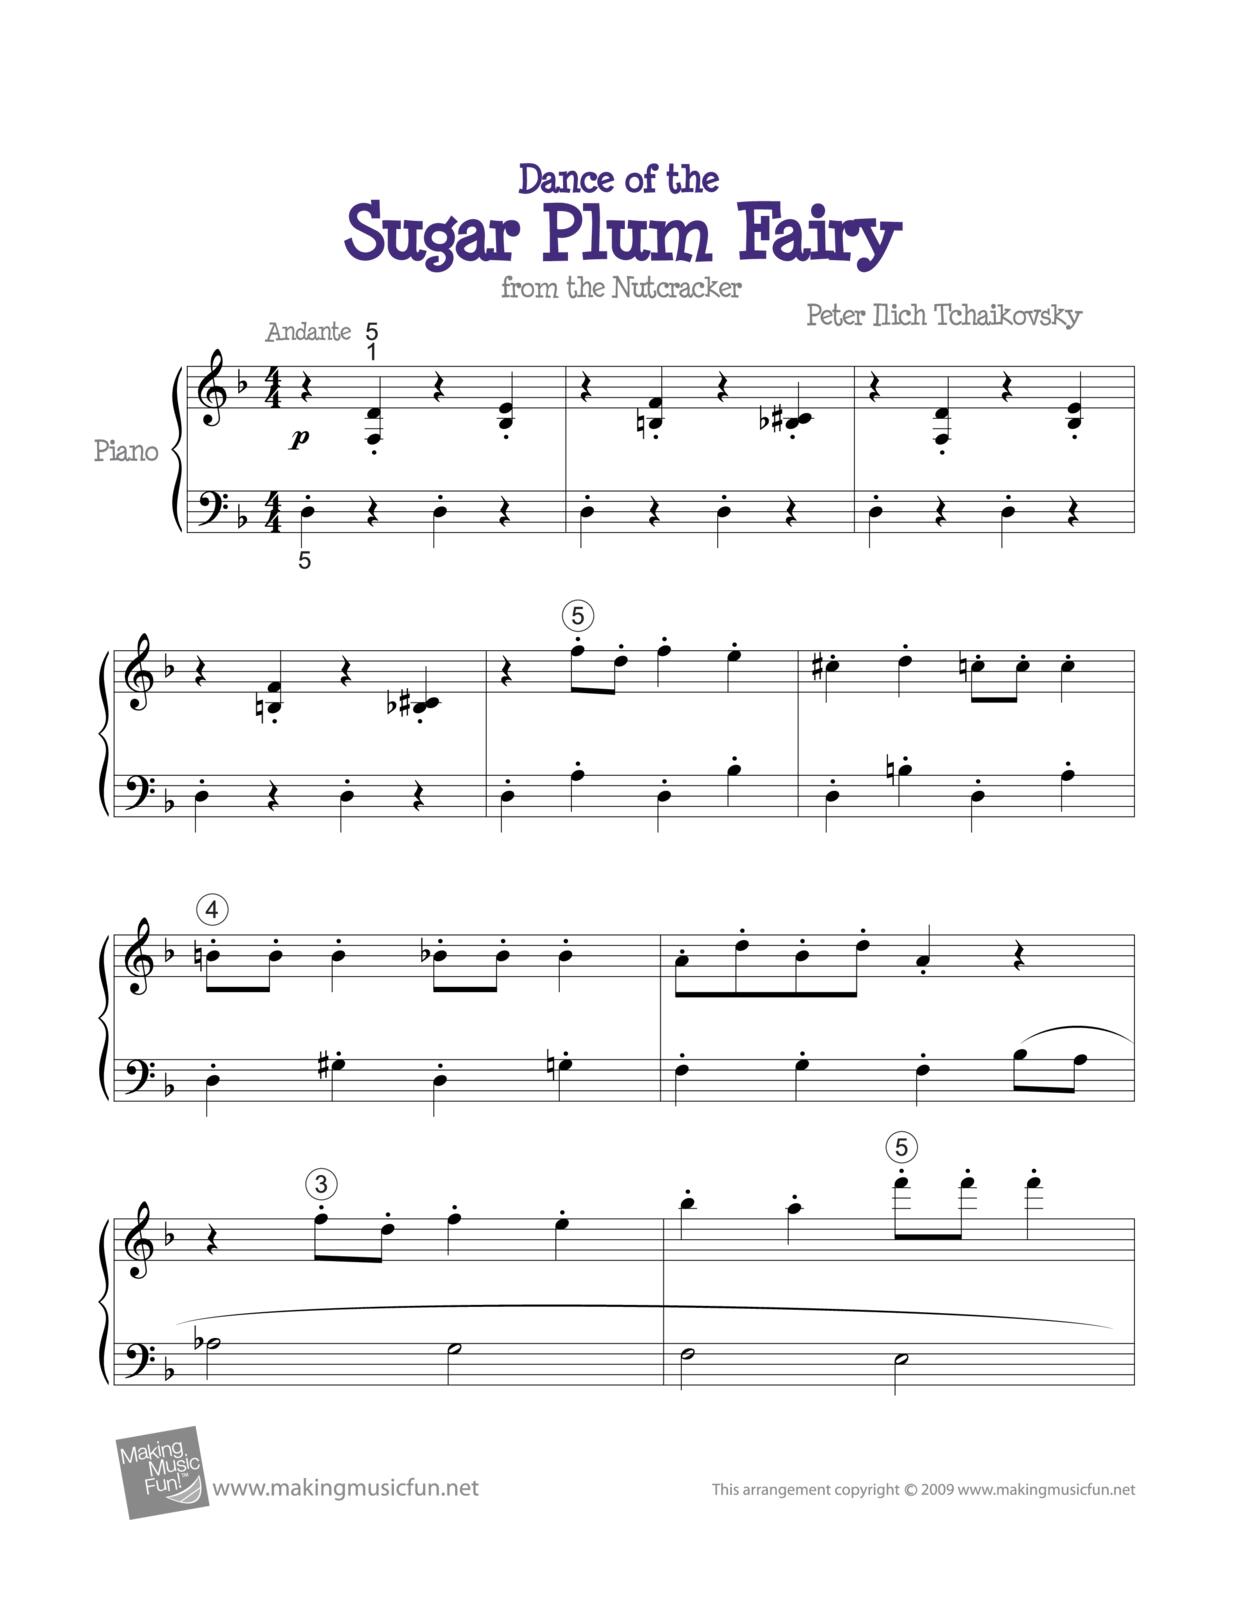 Nutcracker Suite, Op. 71a: 2b. Dance of the Sugar-Plum Fairy琴谱